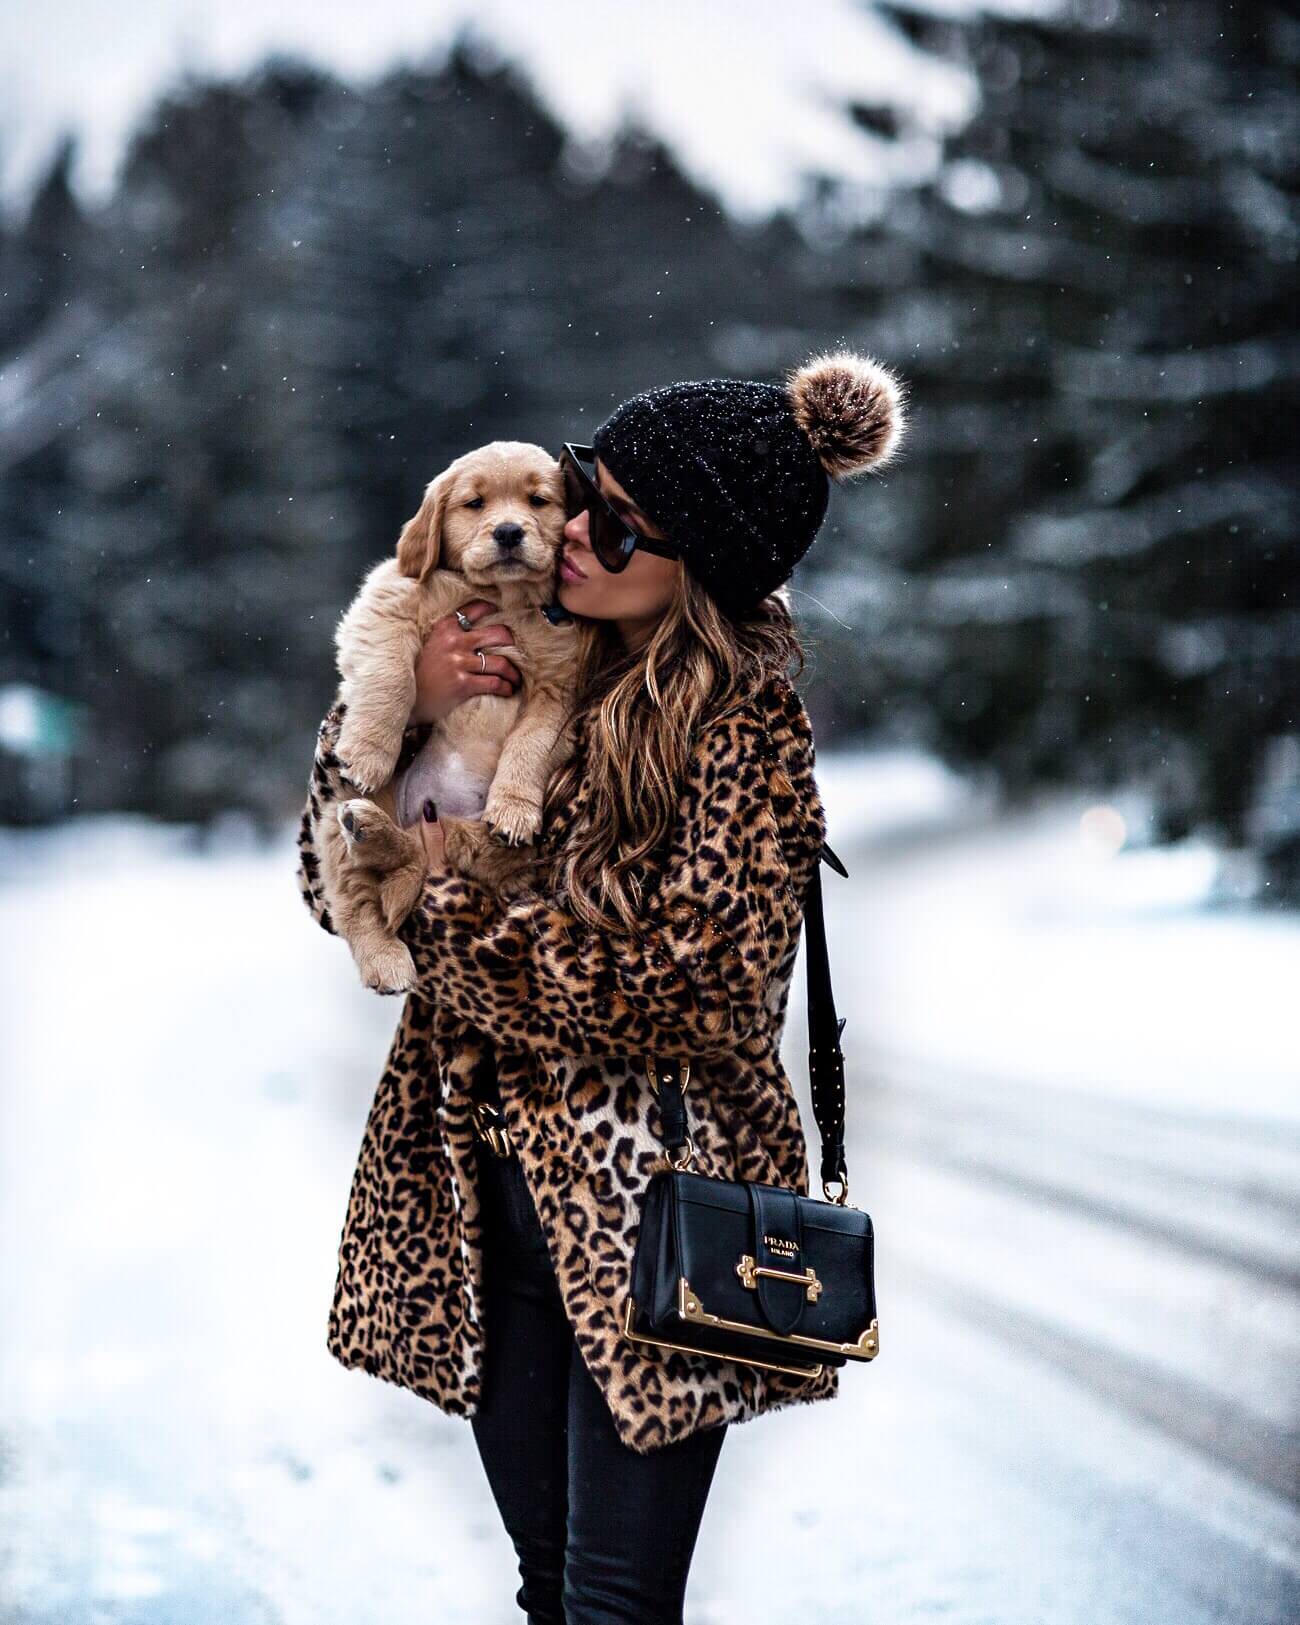 mia mia mine wearing a leopard coat with golden retriever puppy leo